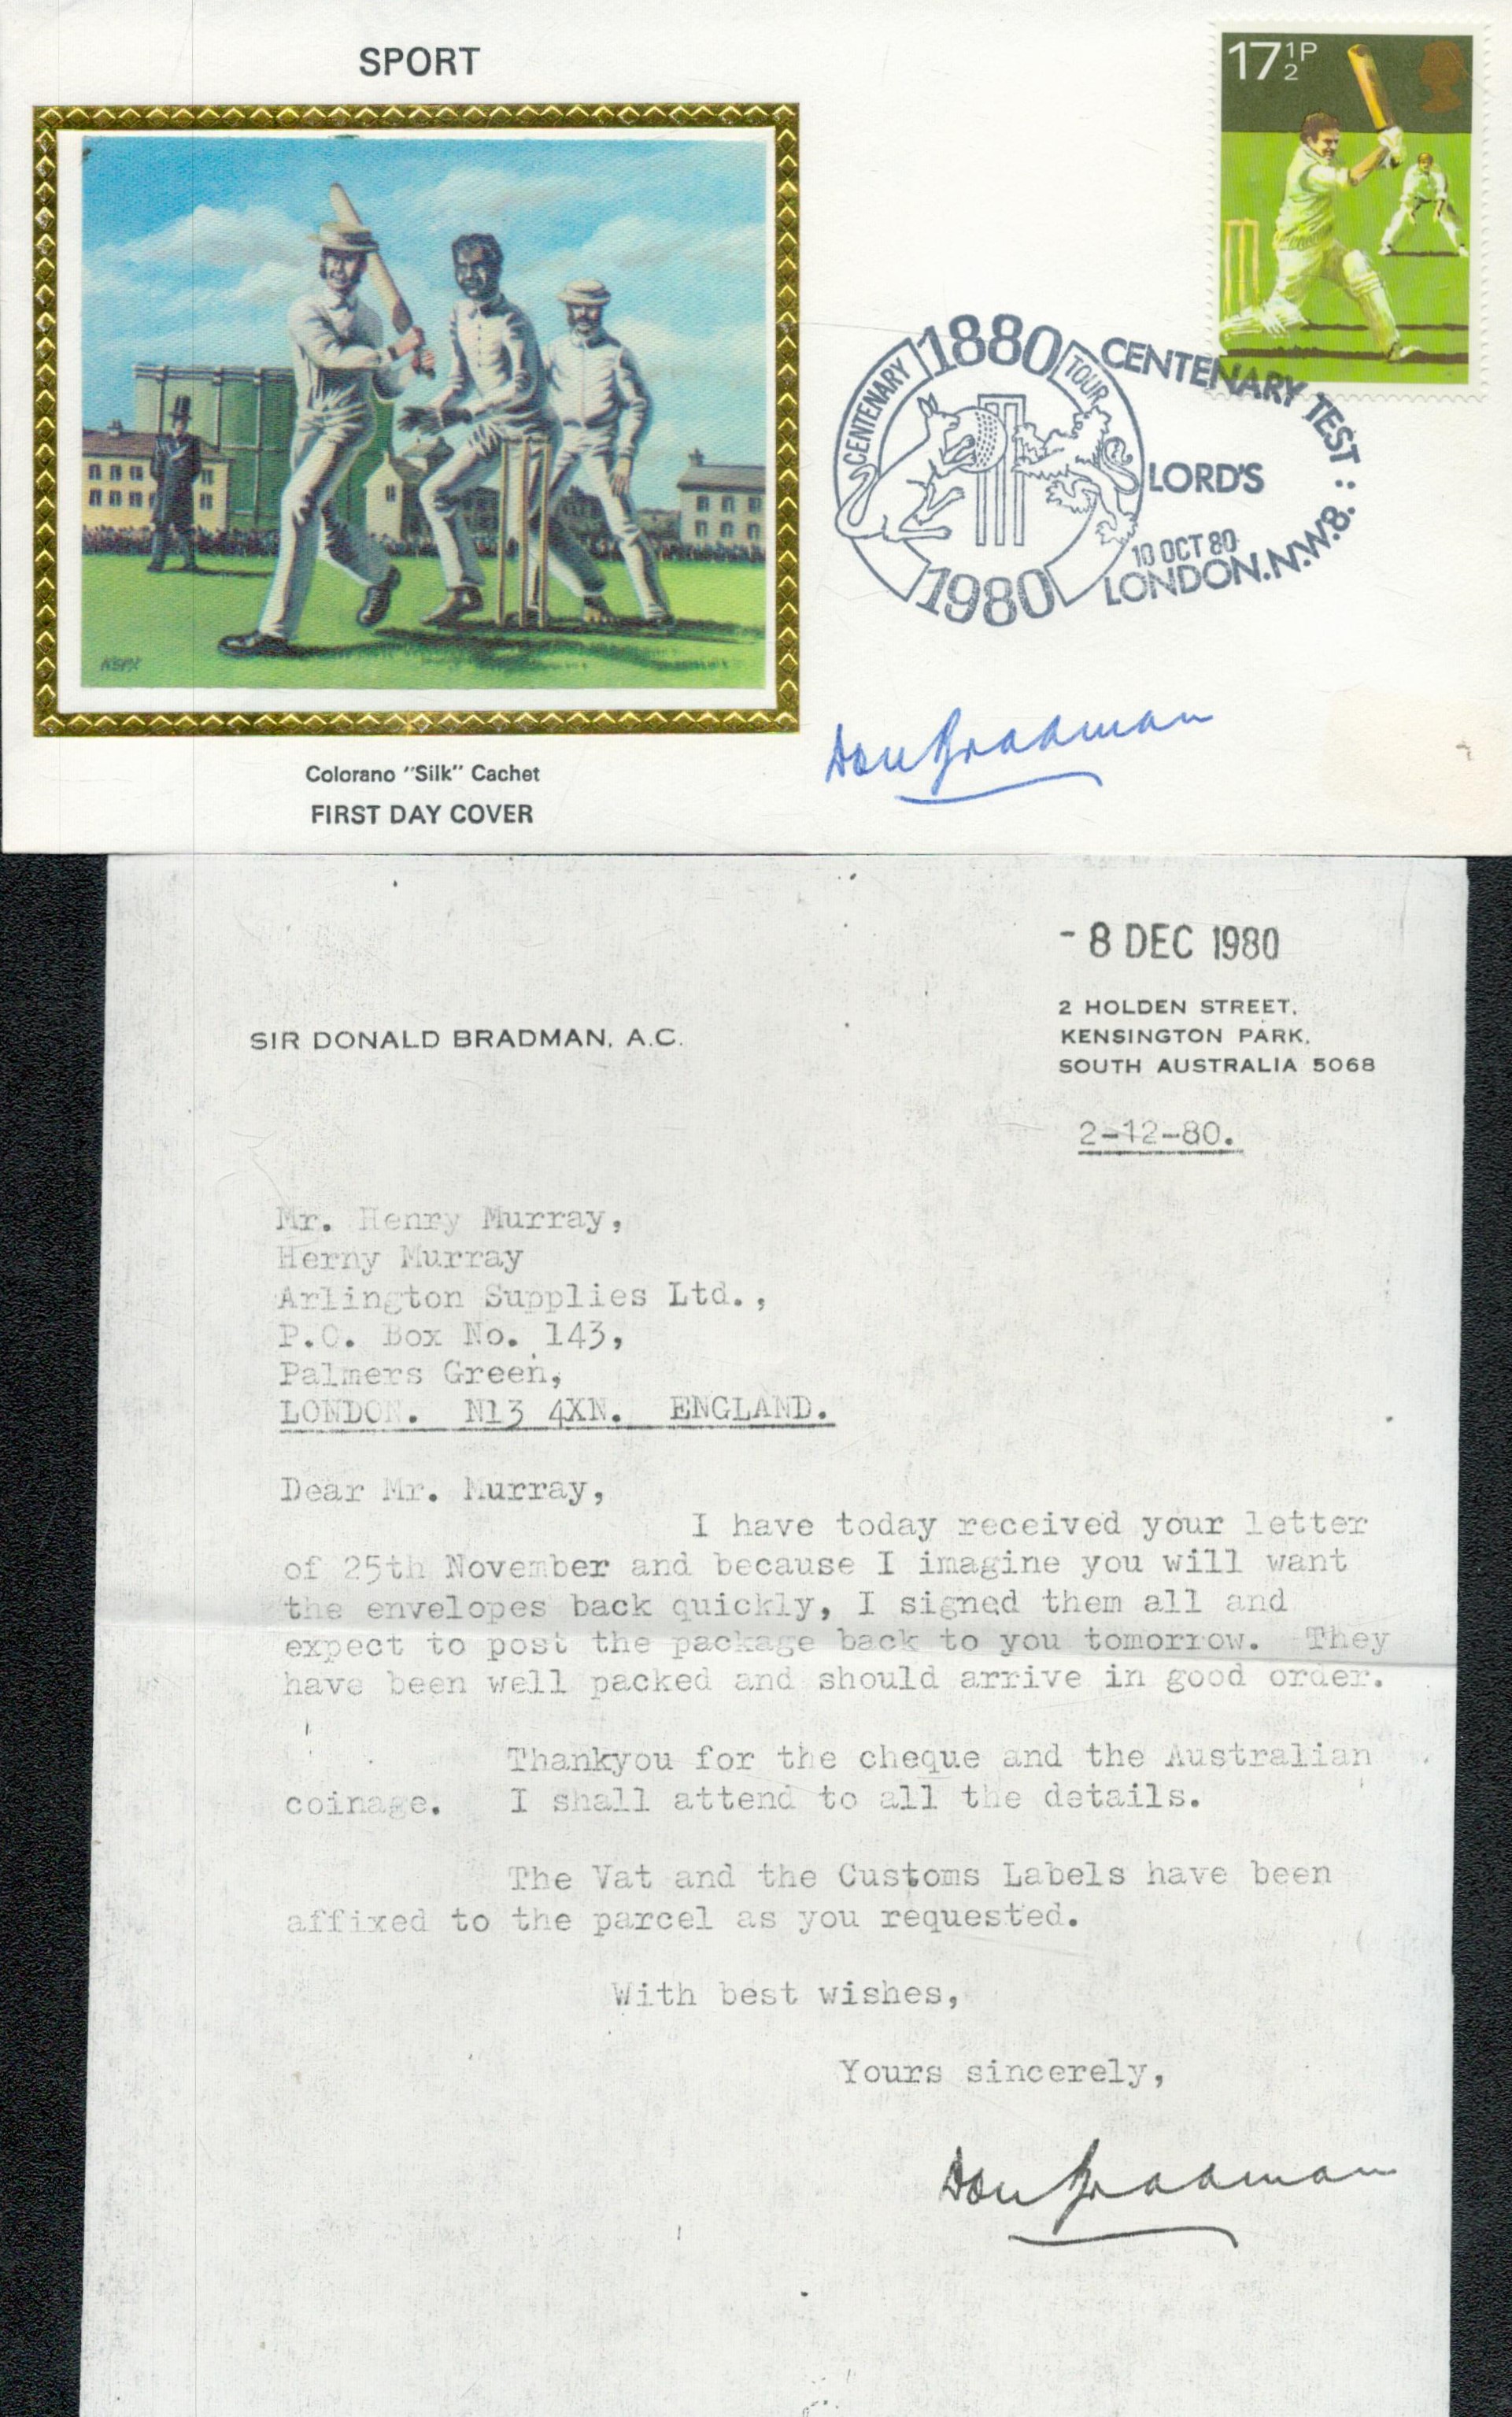 Sir Don Bradman Cricket legend signed rare 1980 Colorano Silk Centenary Test Match FDC. Sir Donald